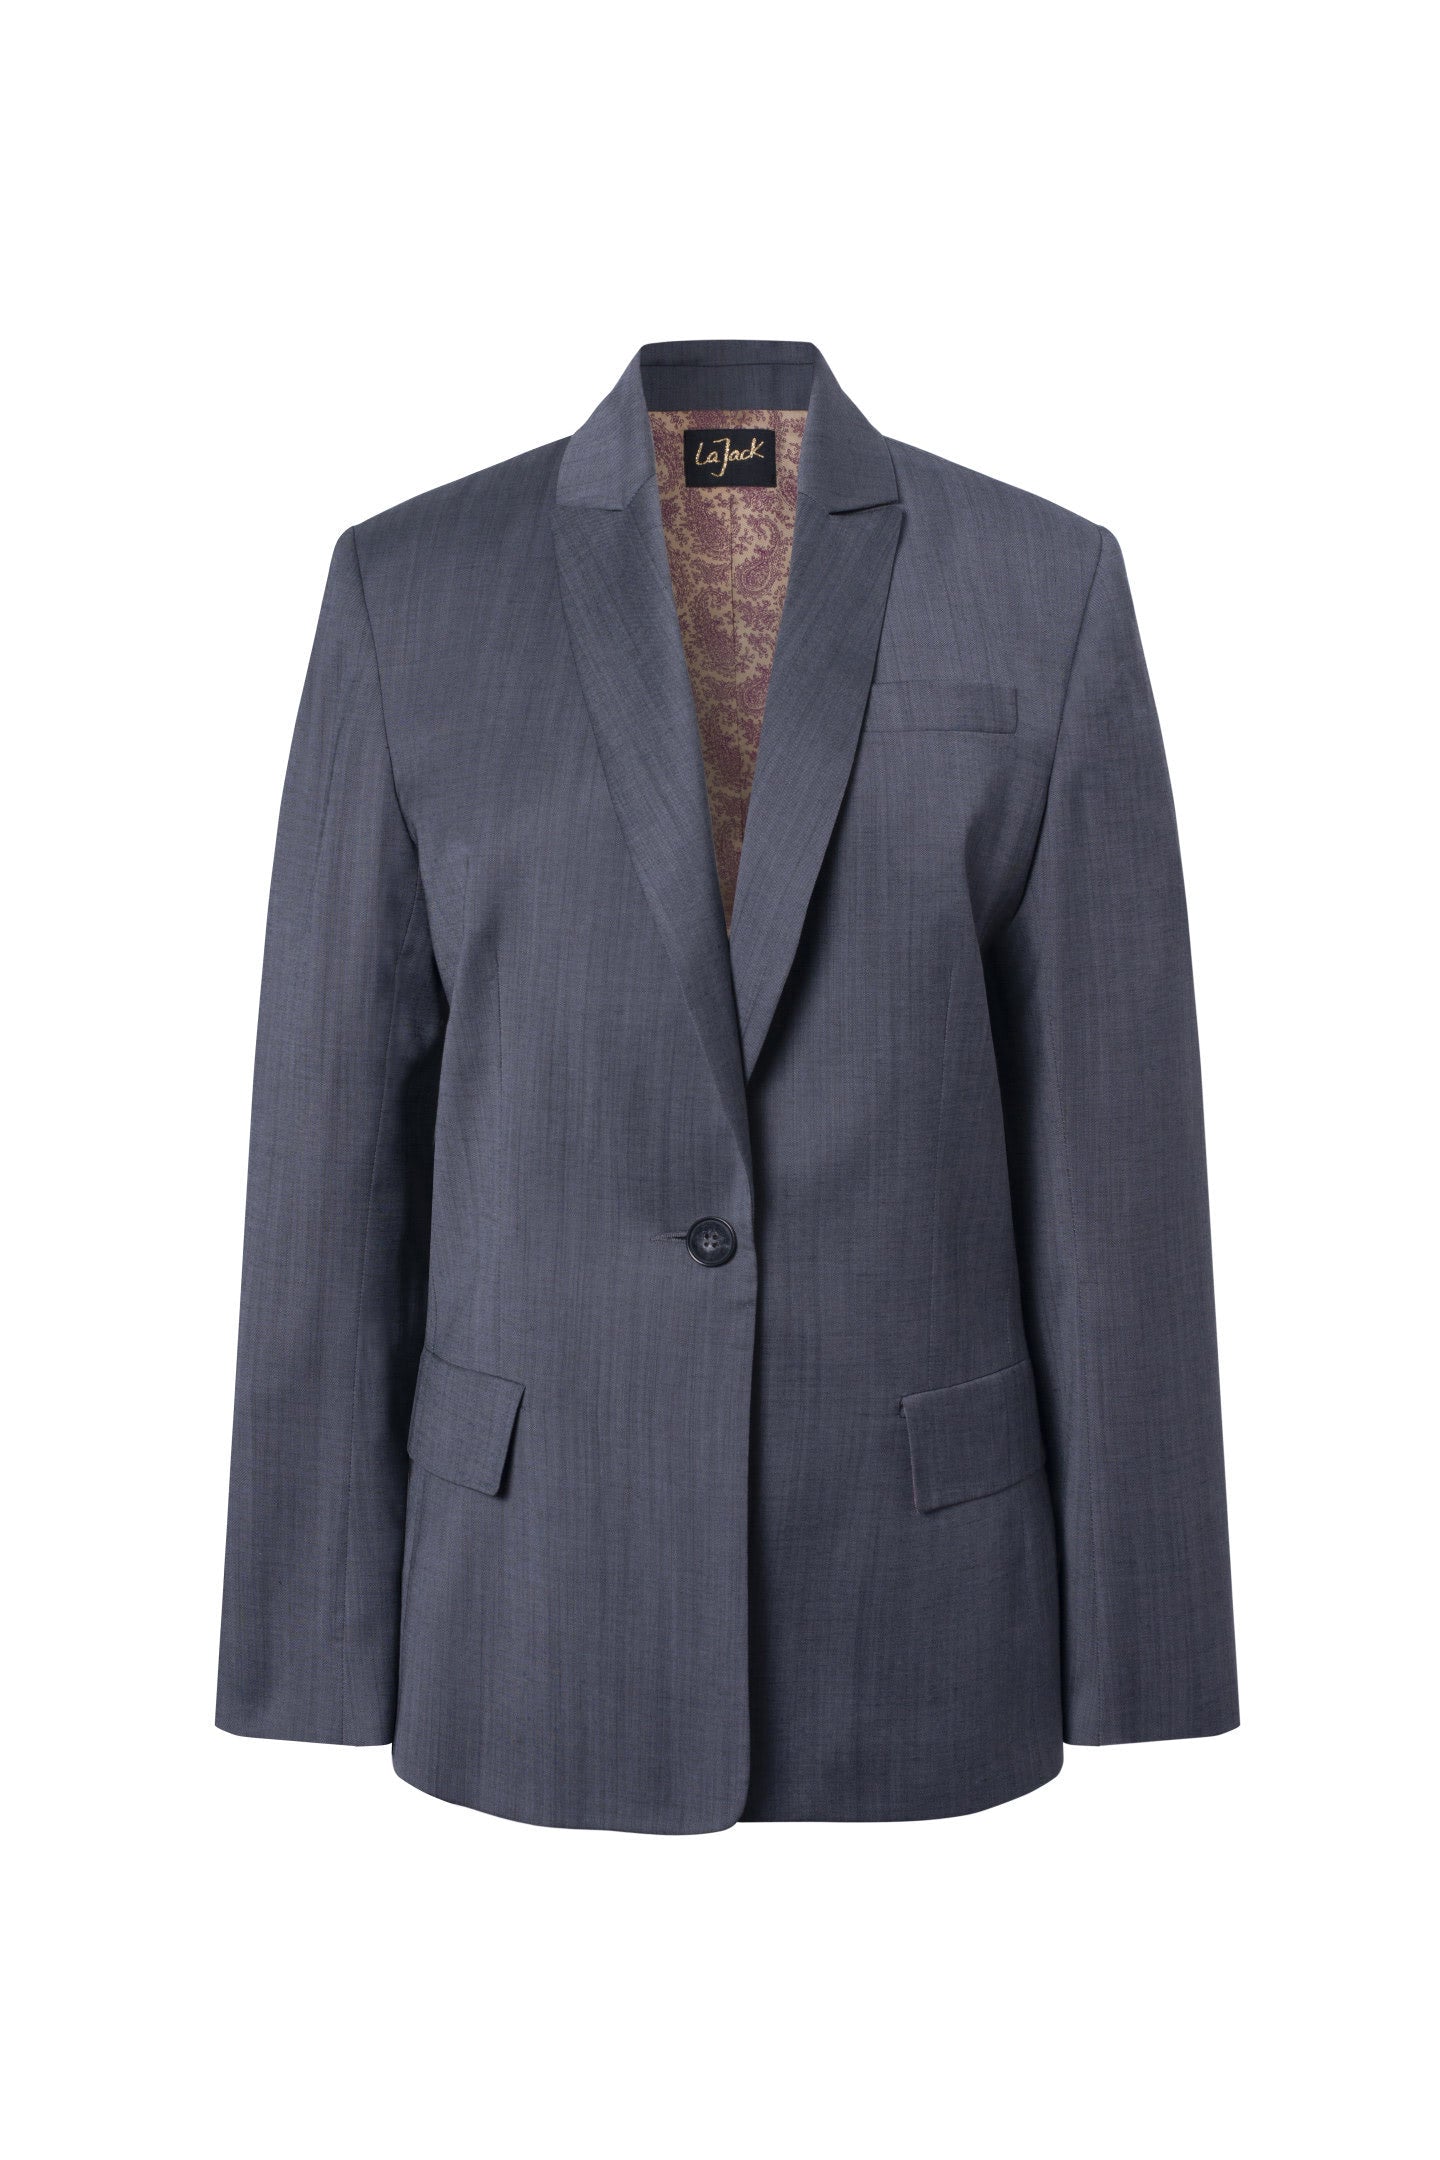 La Billie - Fitted Gray Wool Jacket Raspberry Lining 